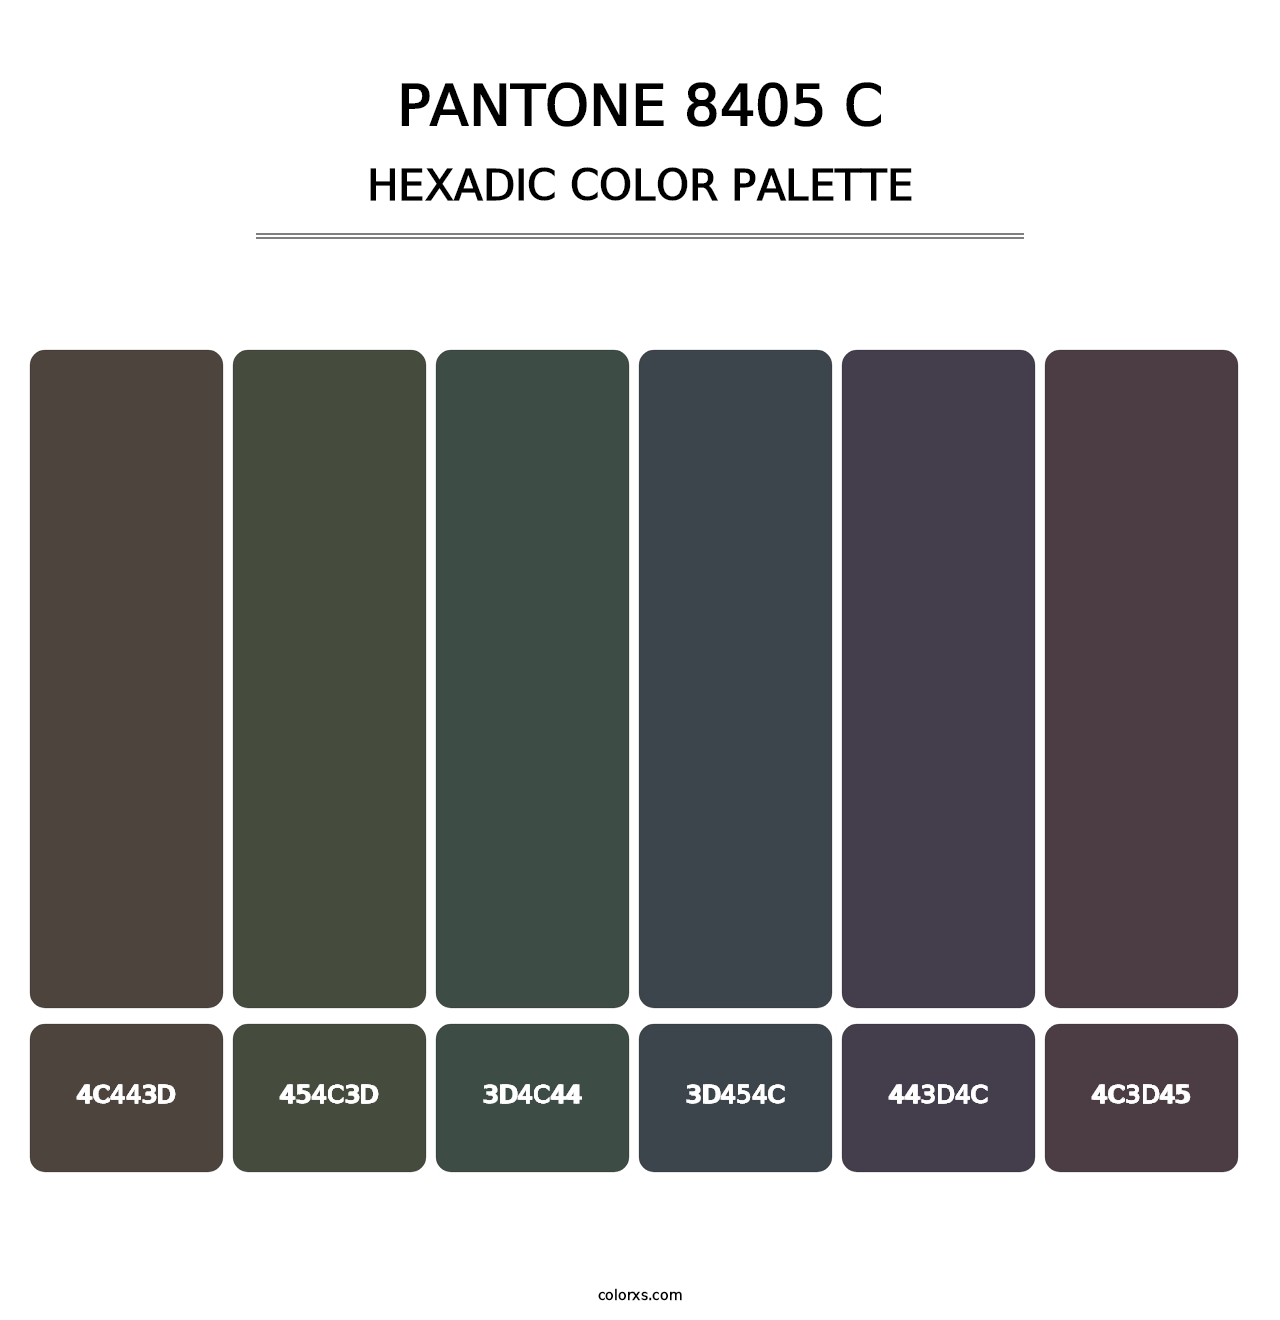 PANTONE 8405 C - Hexadic Color Palette